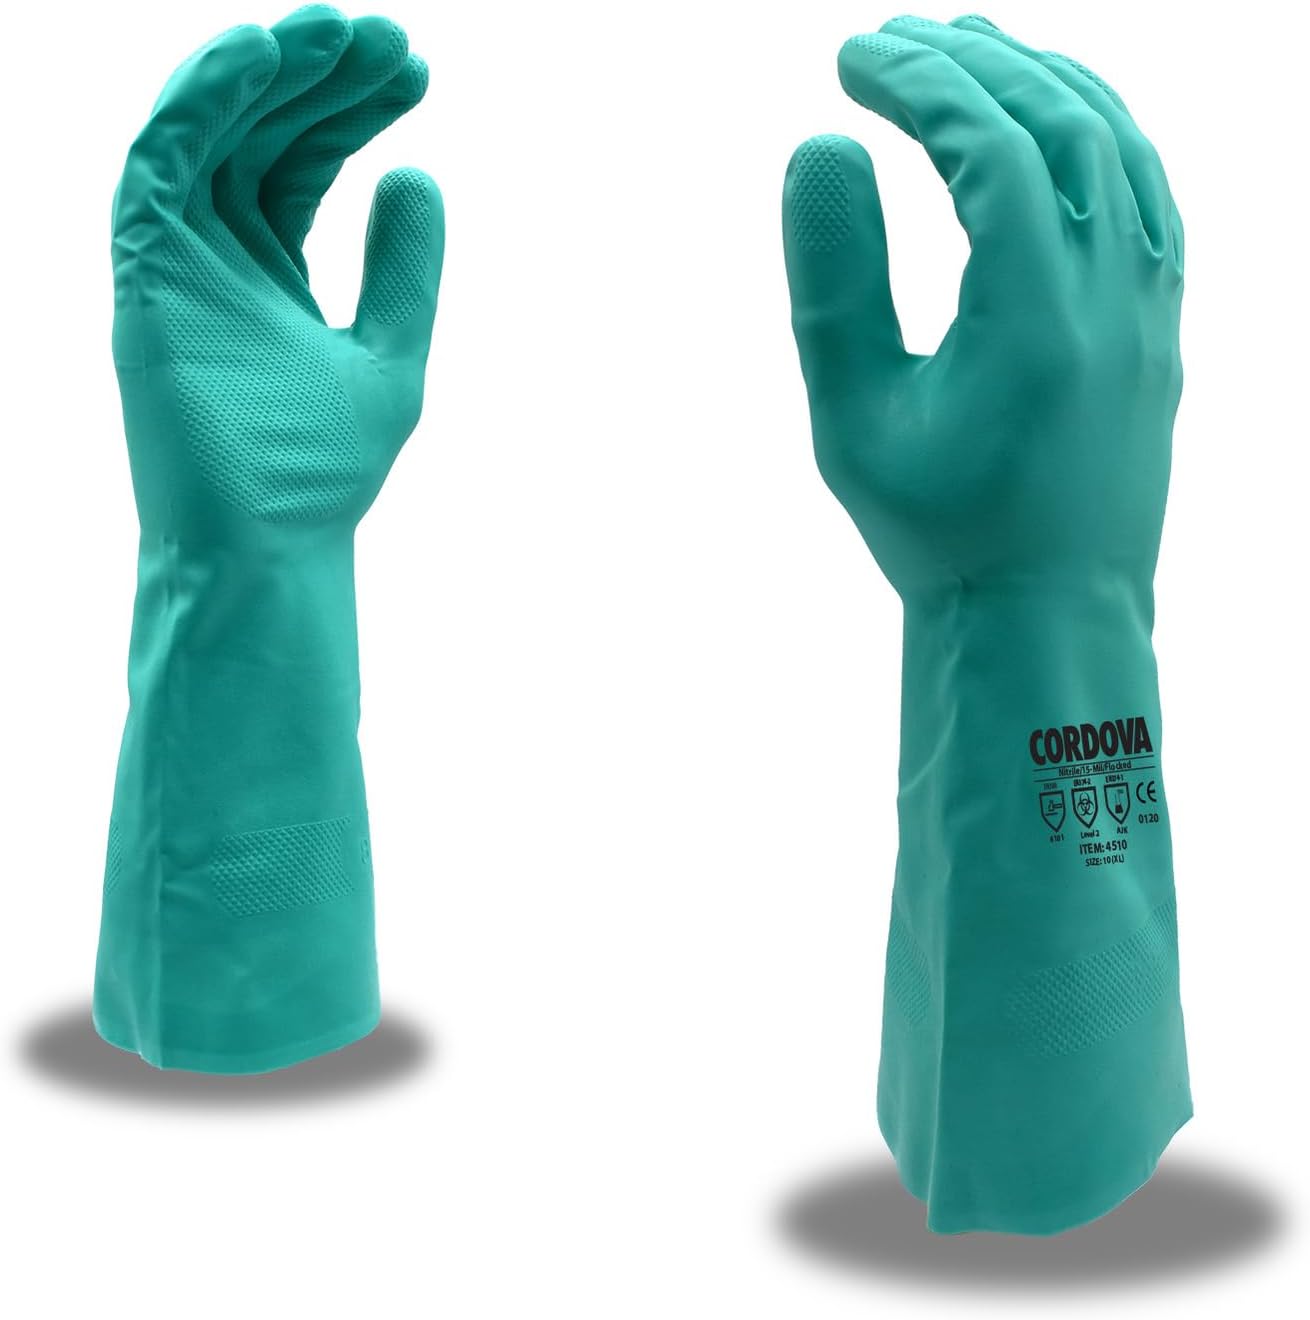 Premium Nitrile Gloves, 15-MIL, 13-Inch, 12-Pack